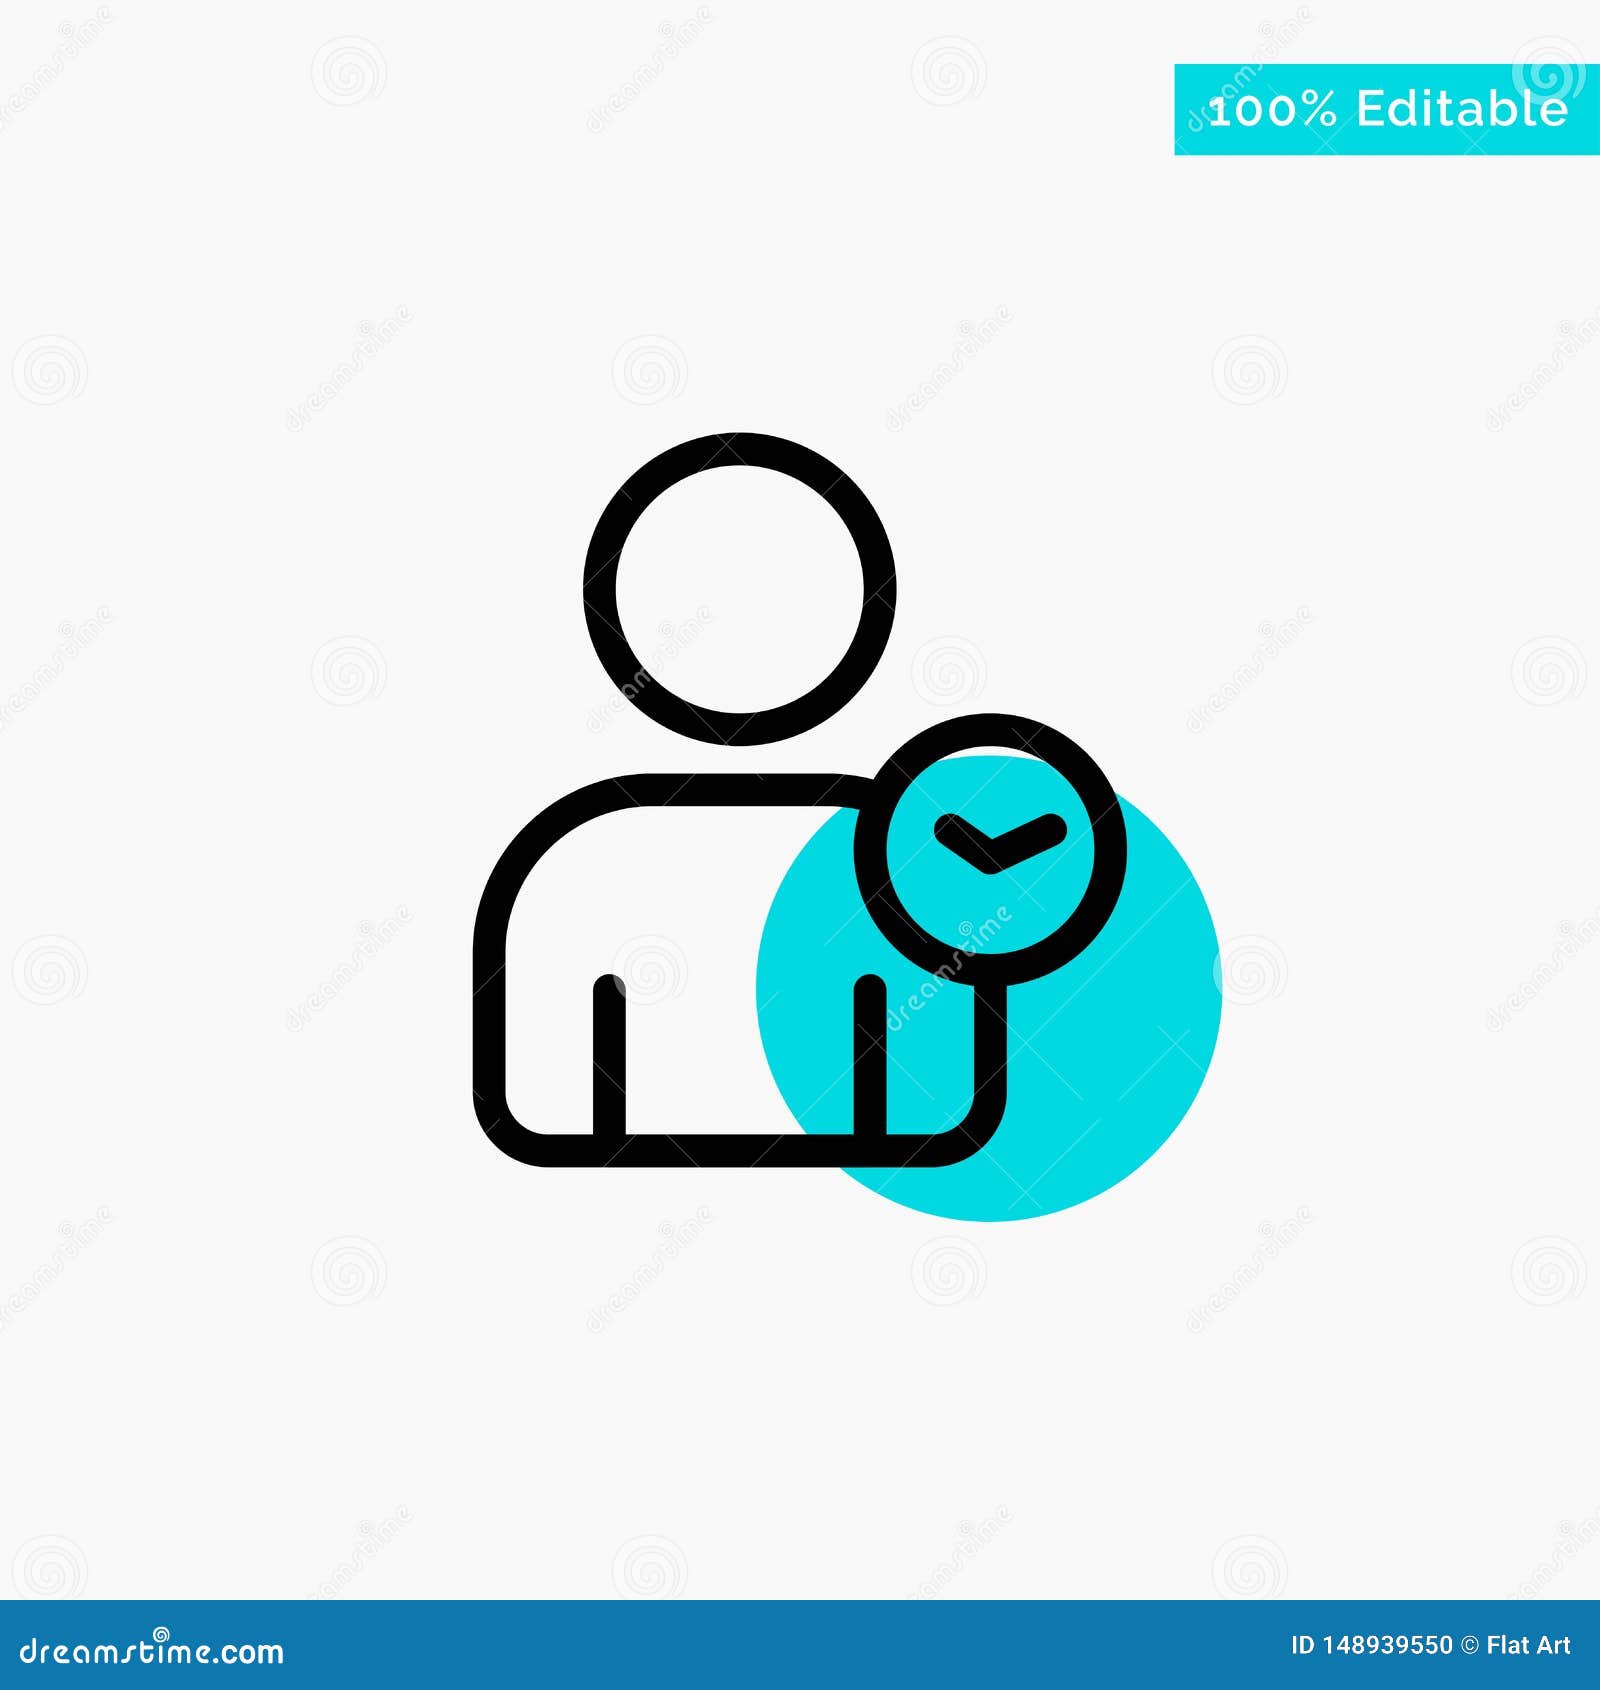 man, user, time, basic turquoise highlight circle point  icon